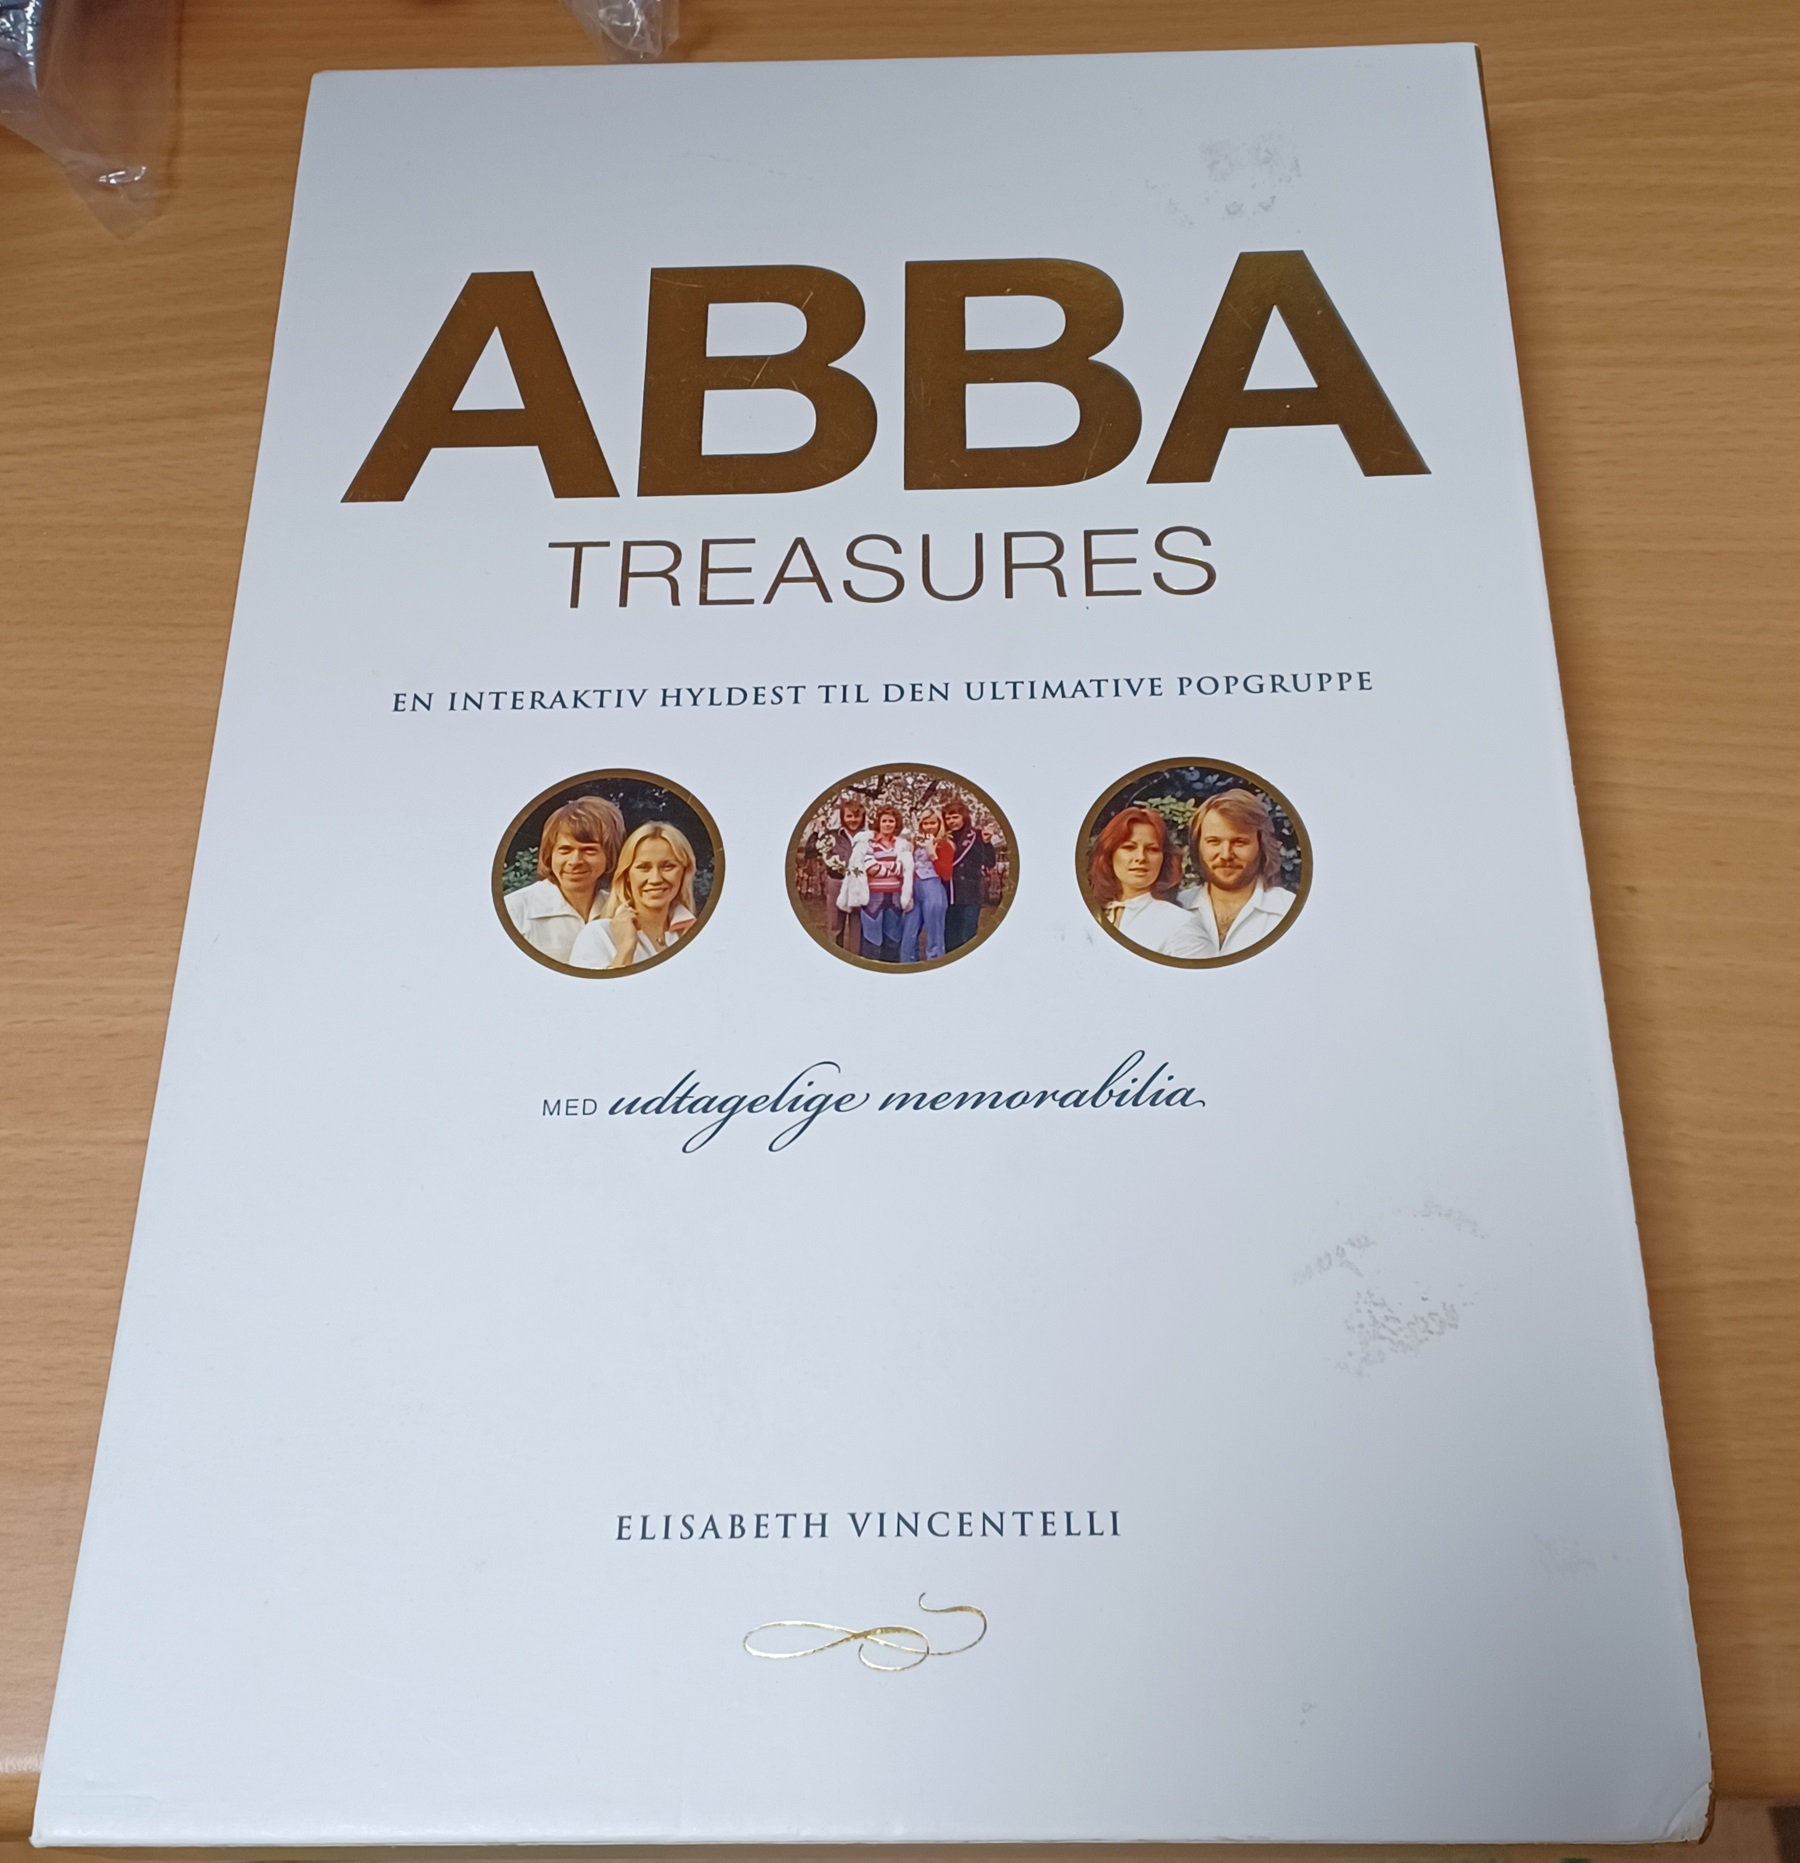 ABBA treasures